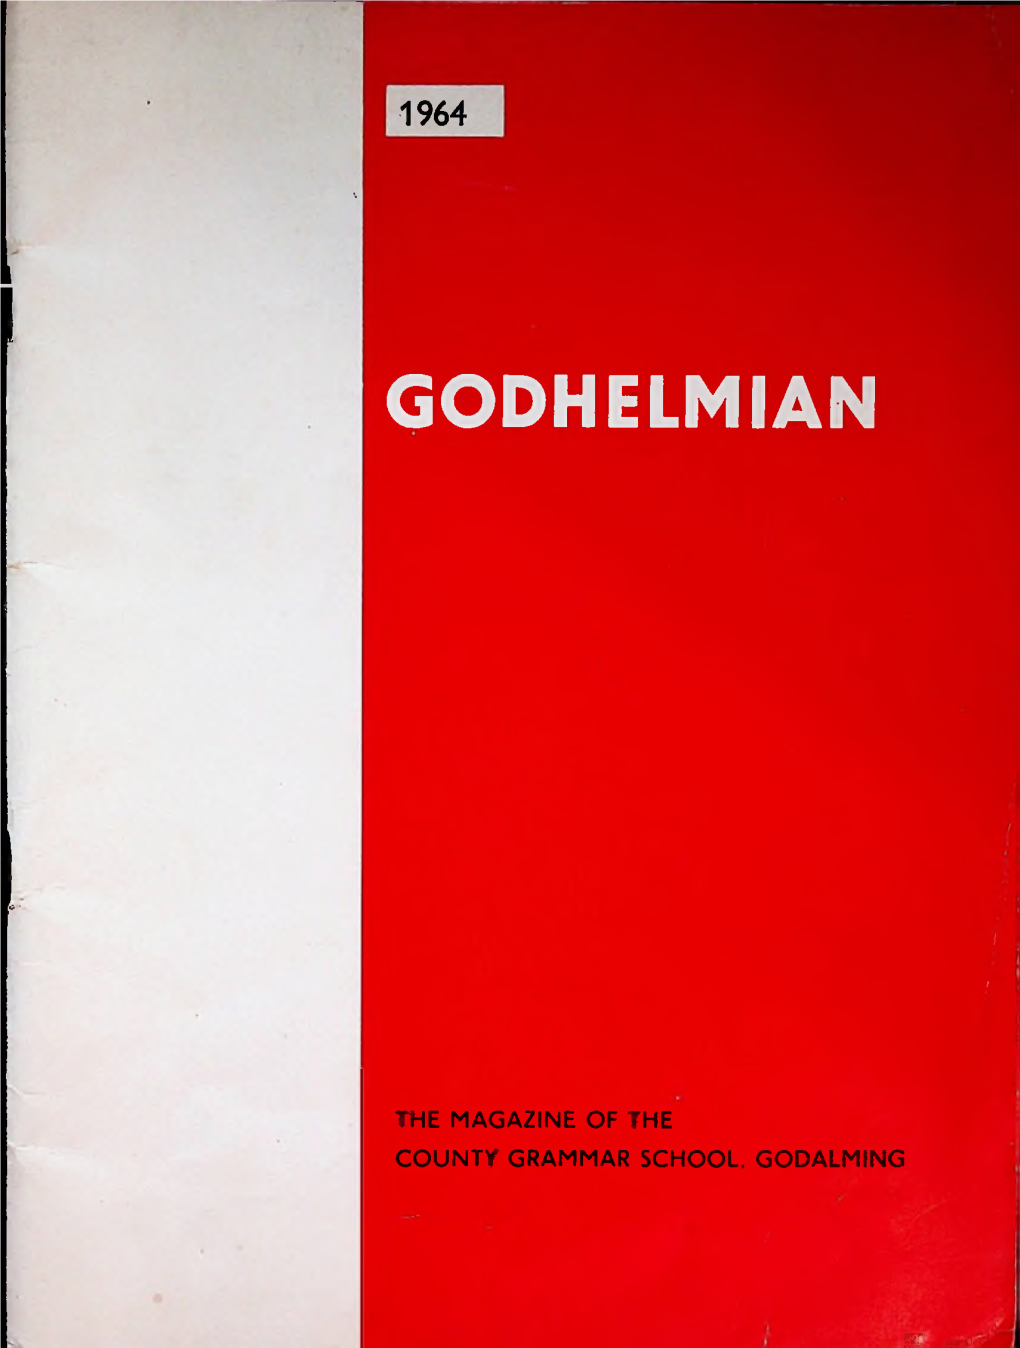 Godhelmian 1964